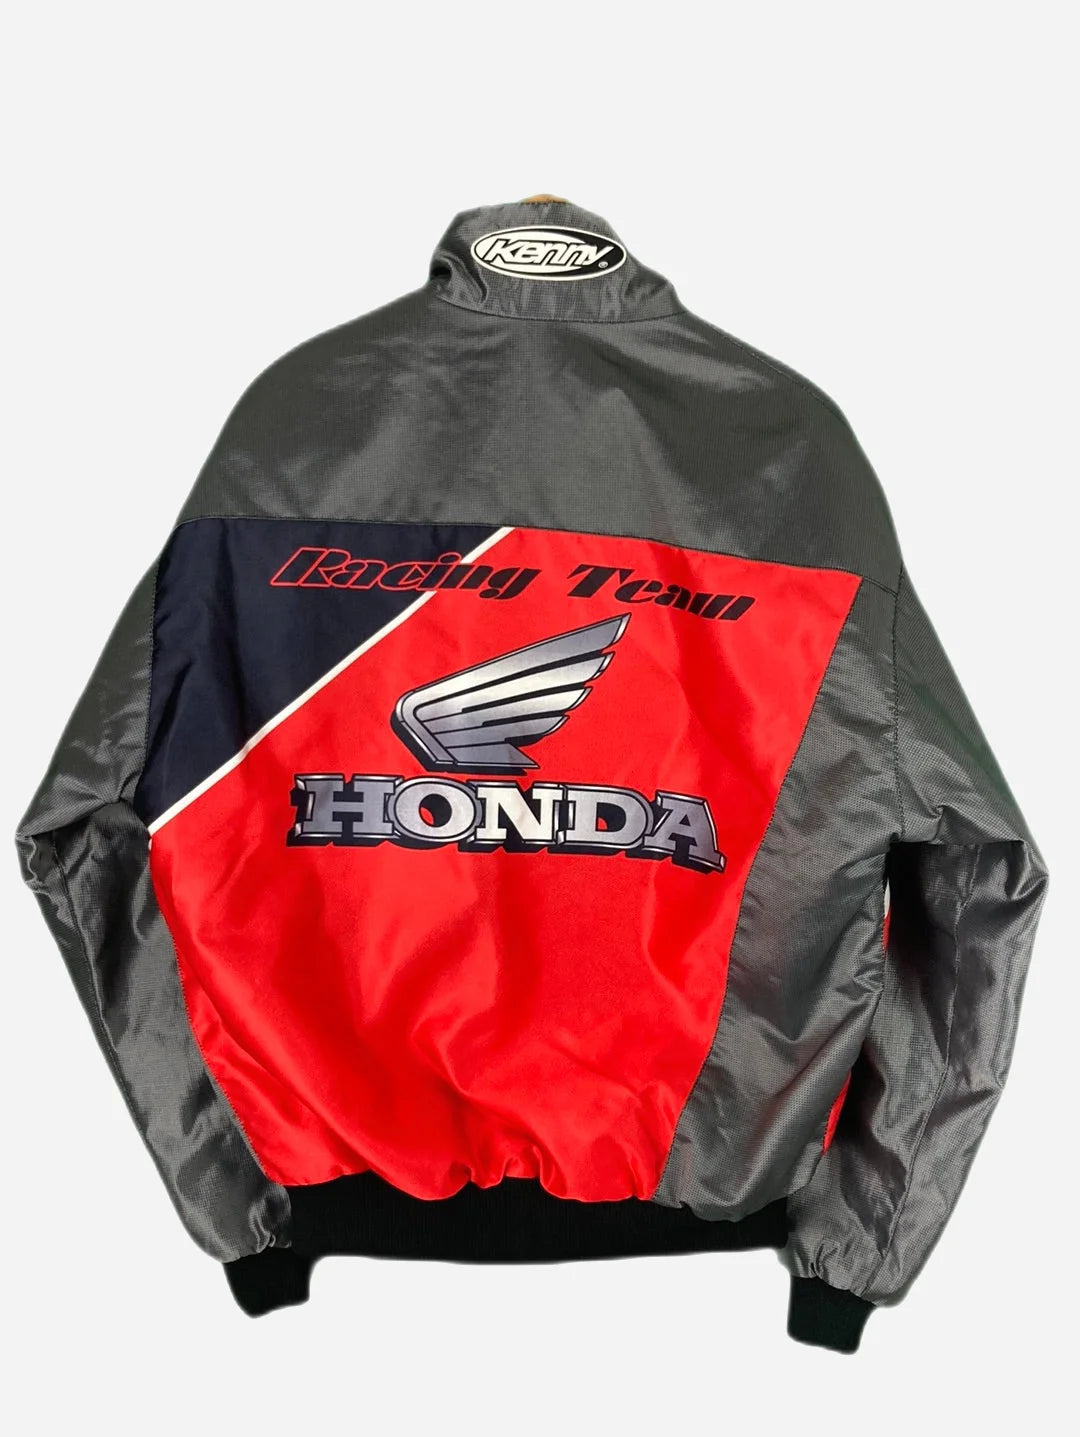 Honda Racing Team Jacke (L)